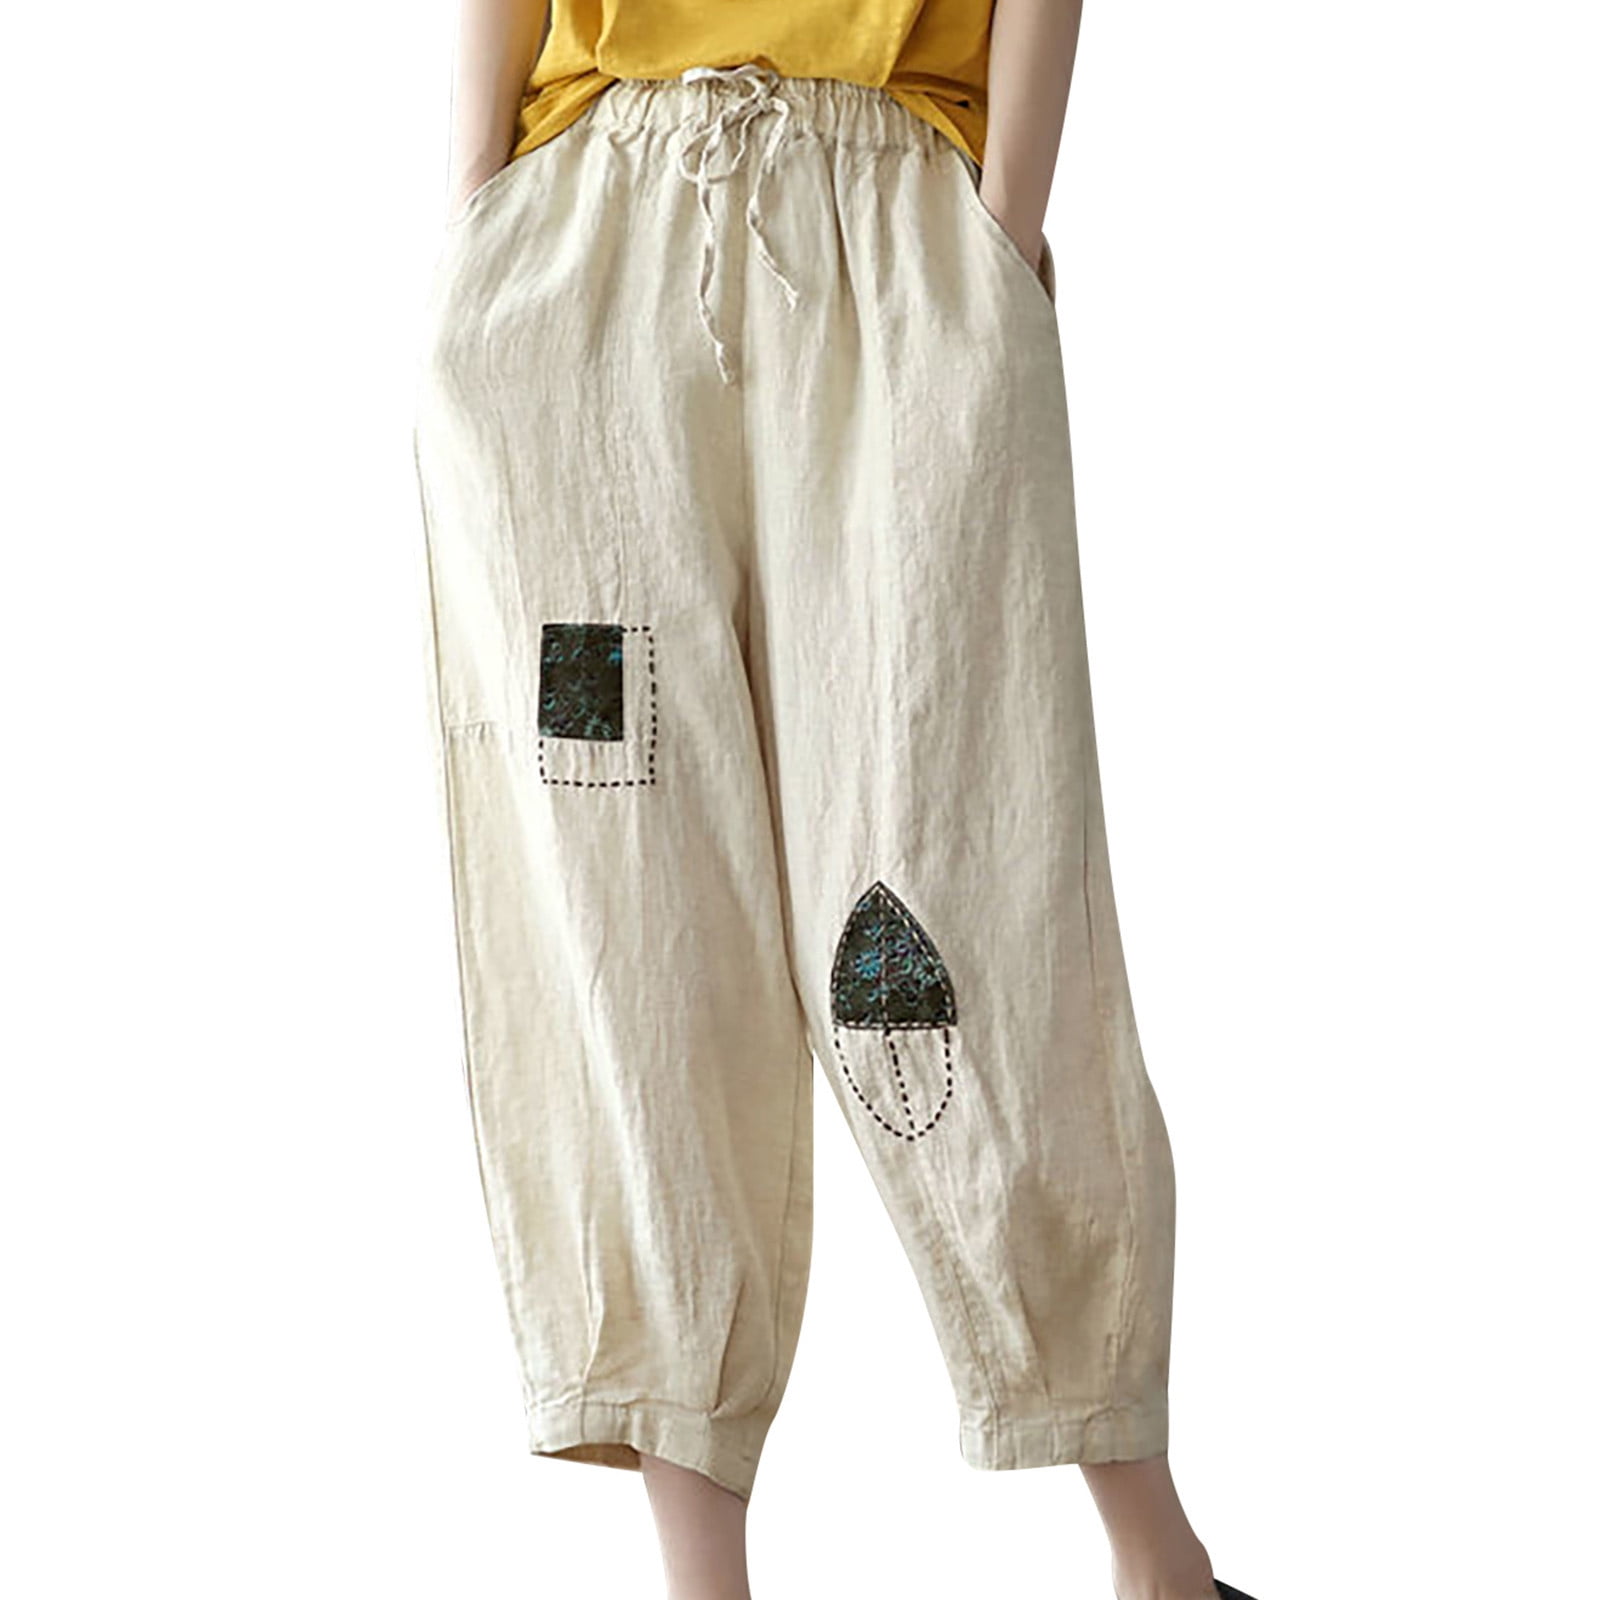 Ecqkame Women's Casual Cotton Linen Baggy Pants Clearance Women's ...